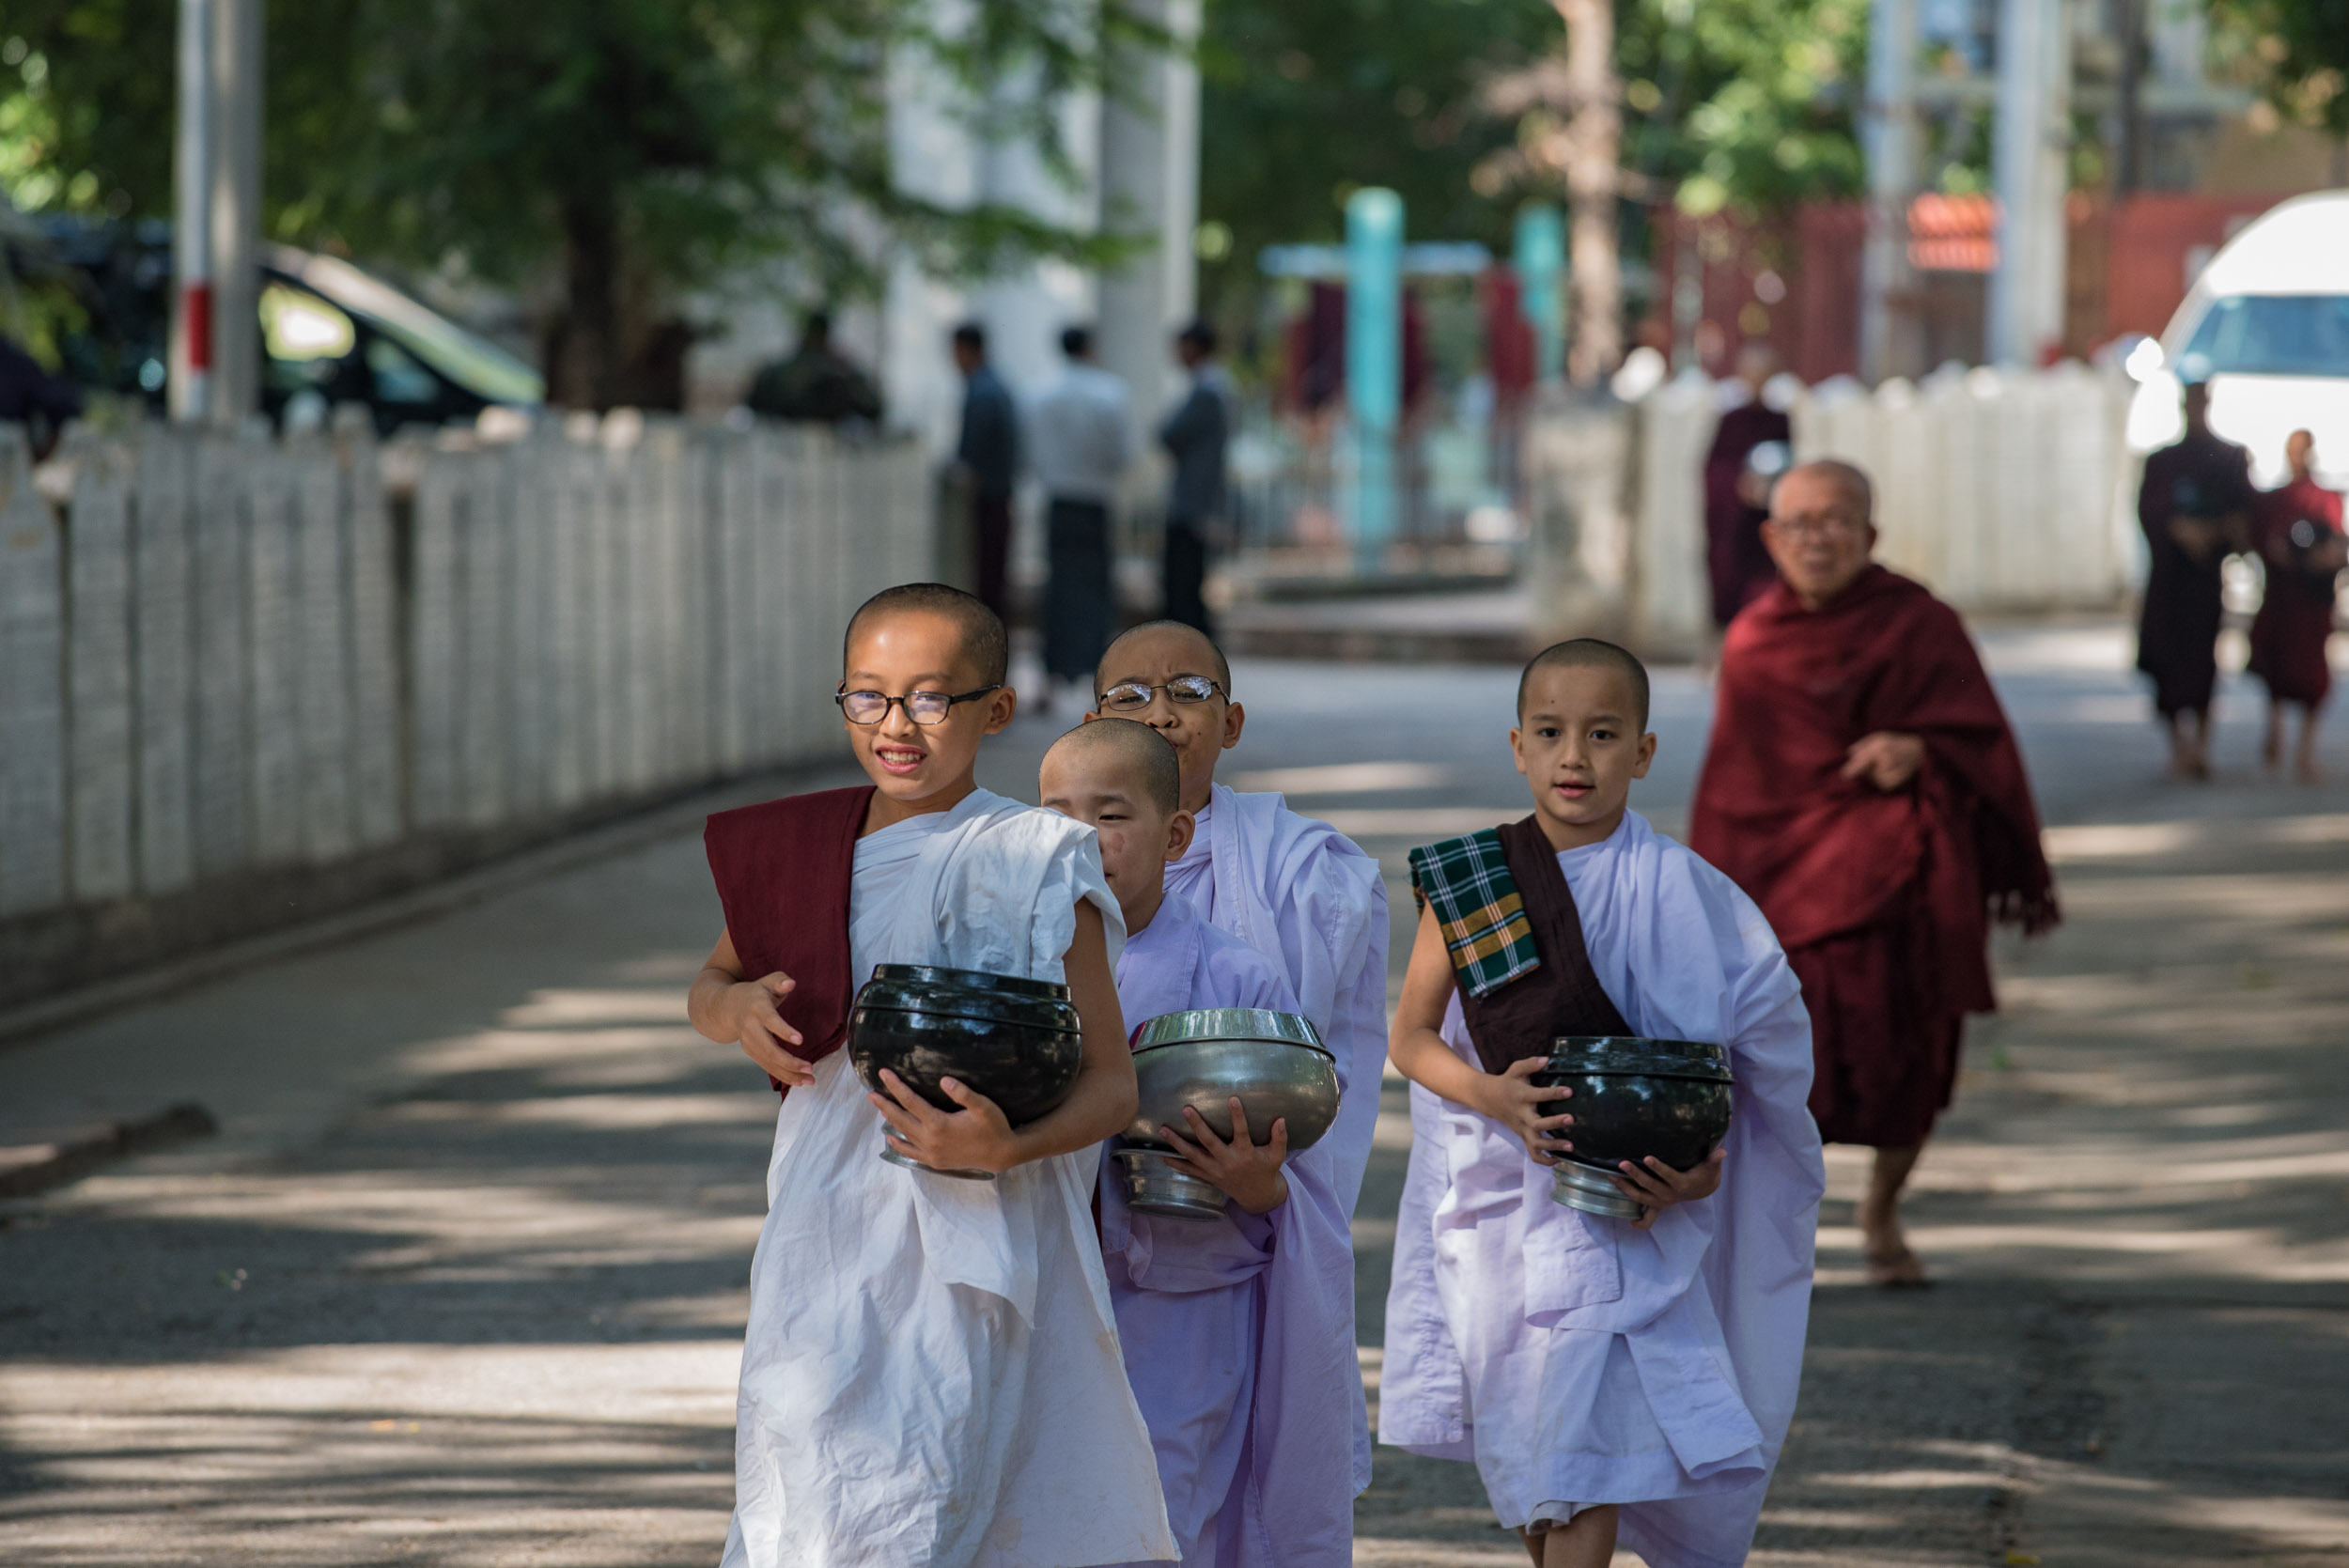 Monastery Children